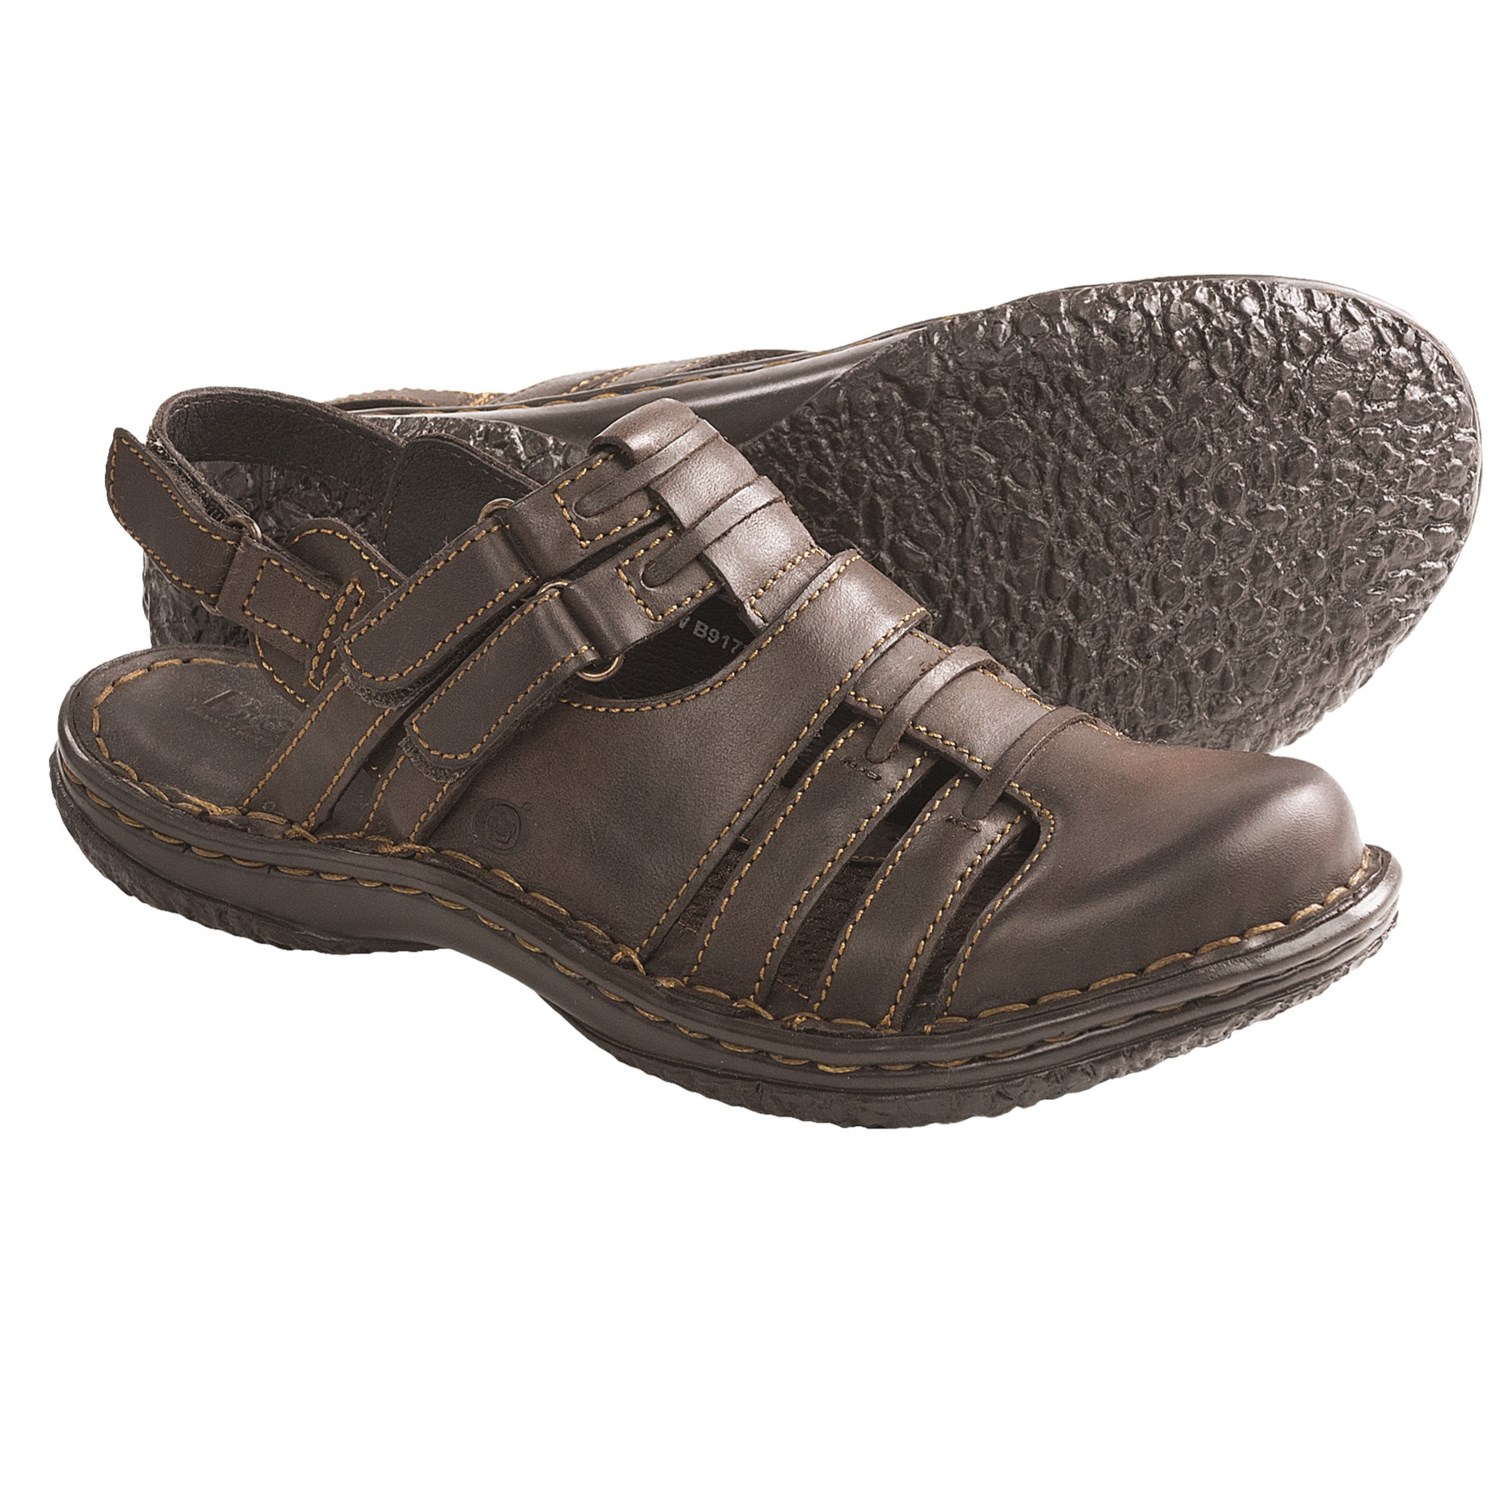 Born Verena Sandals - Leather (For Women) in Dark Brown Full Grain